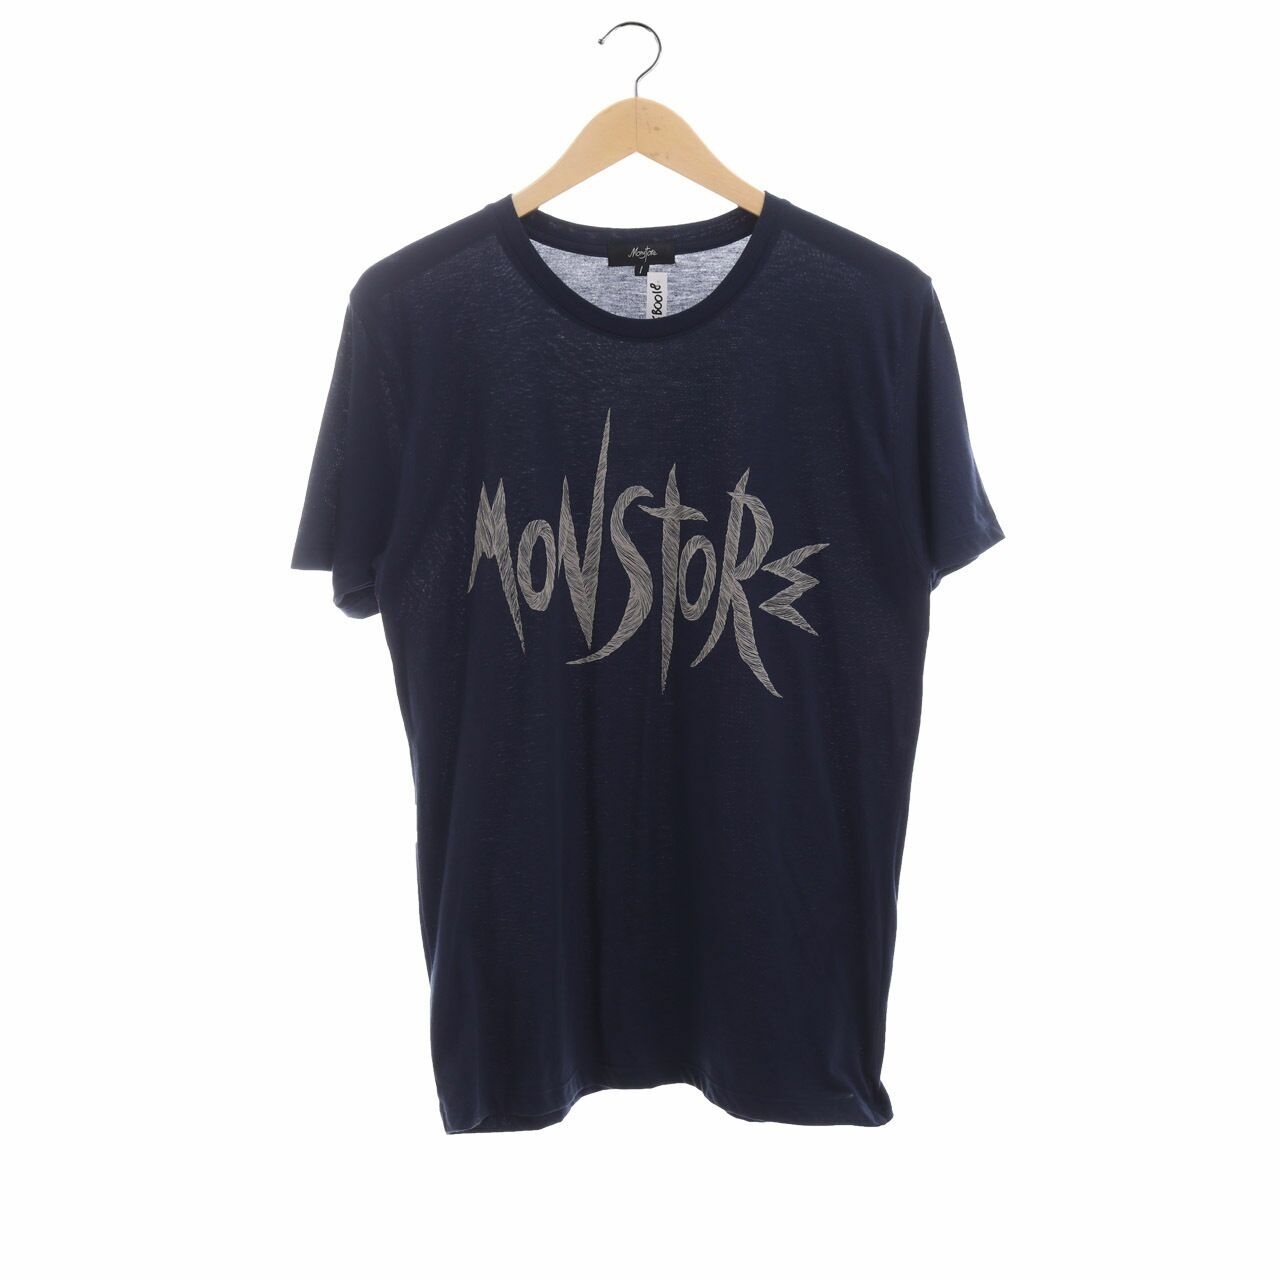 Monstore Navy T-Shirt